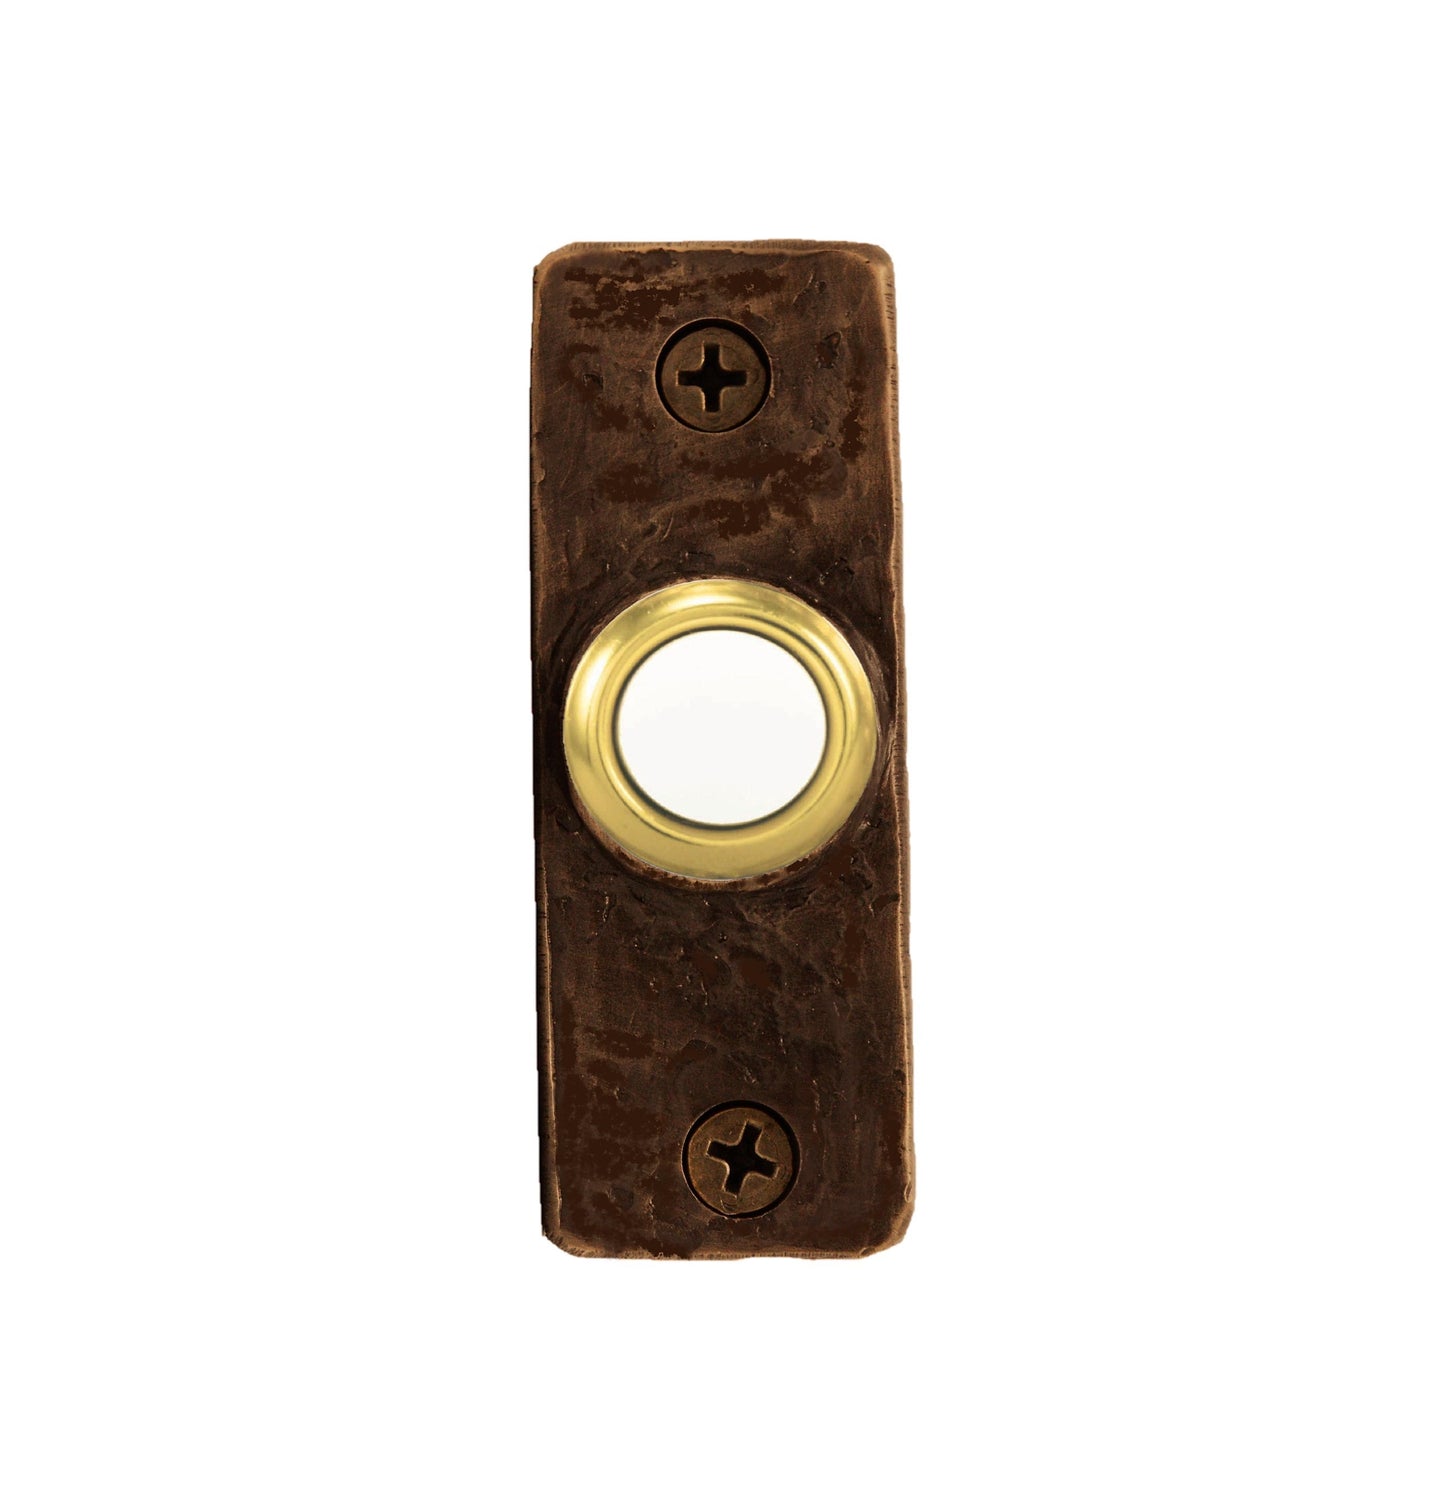 Rustic Extra-slim bronze doorbell - Classic with patina